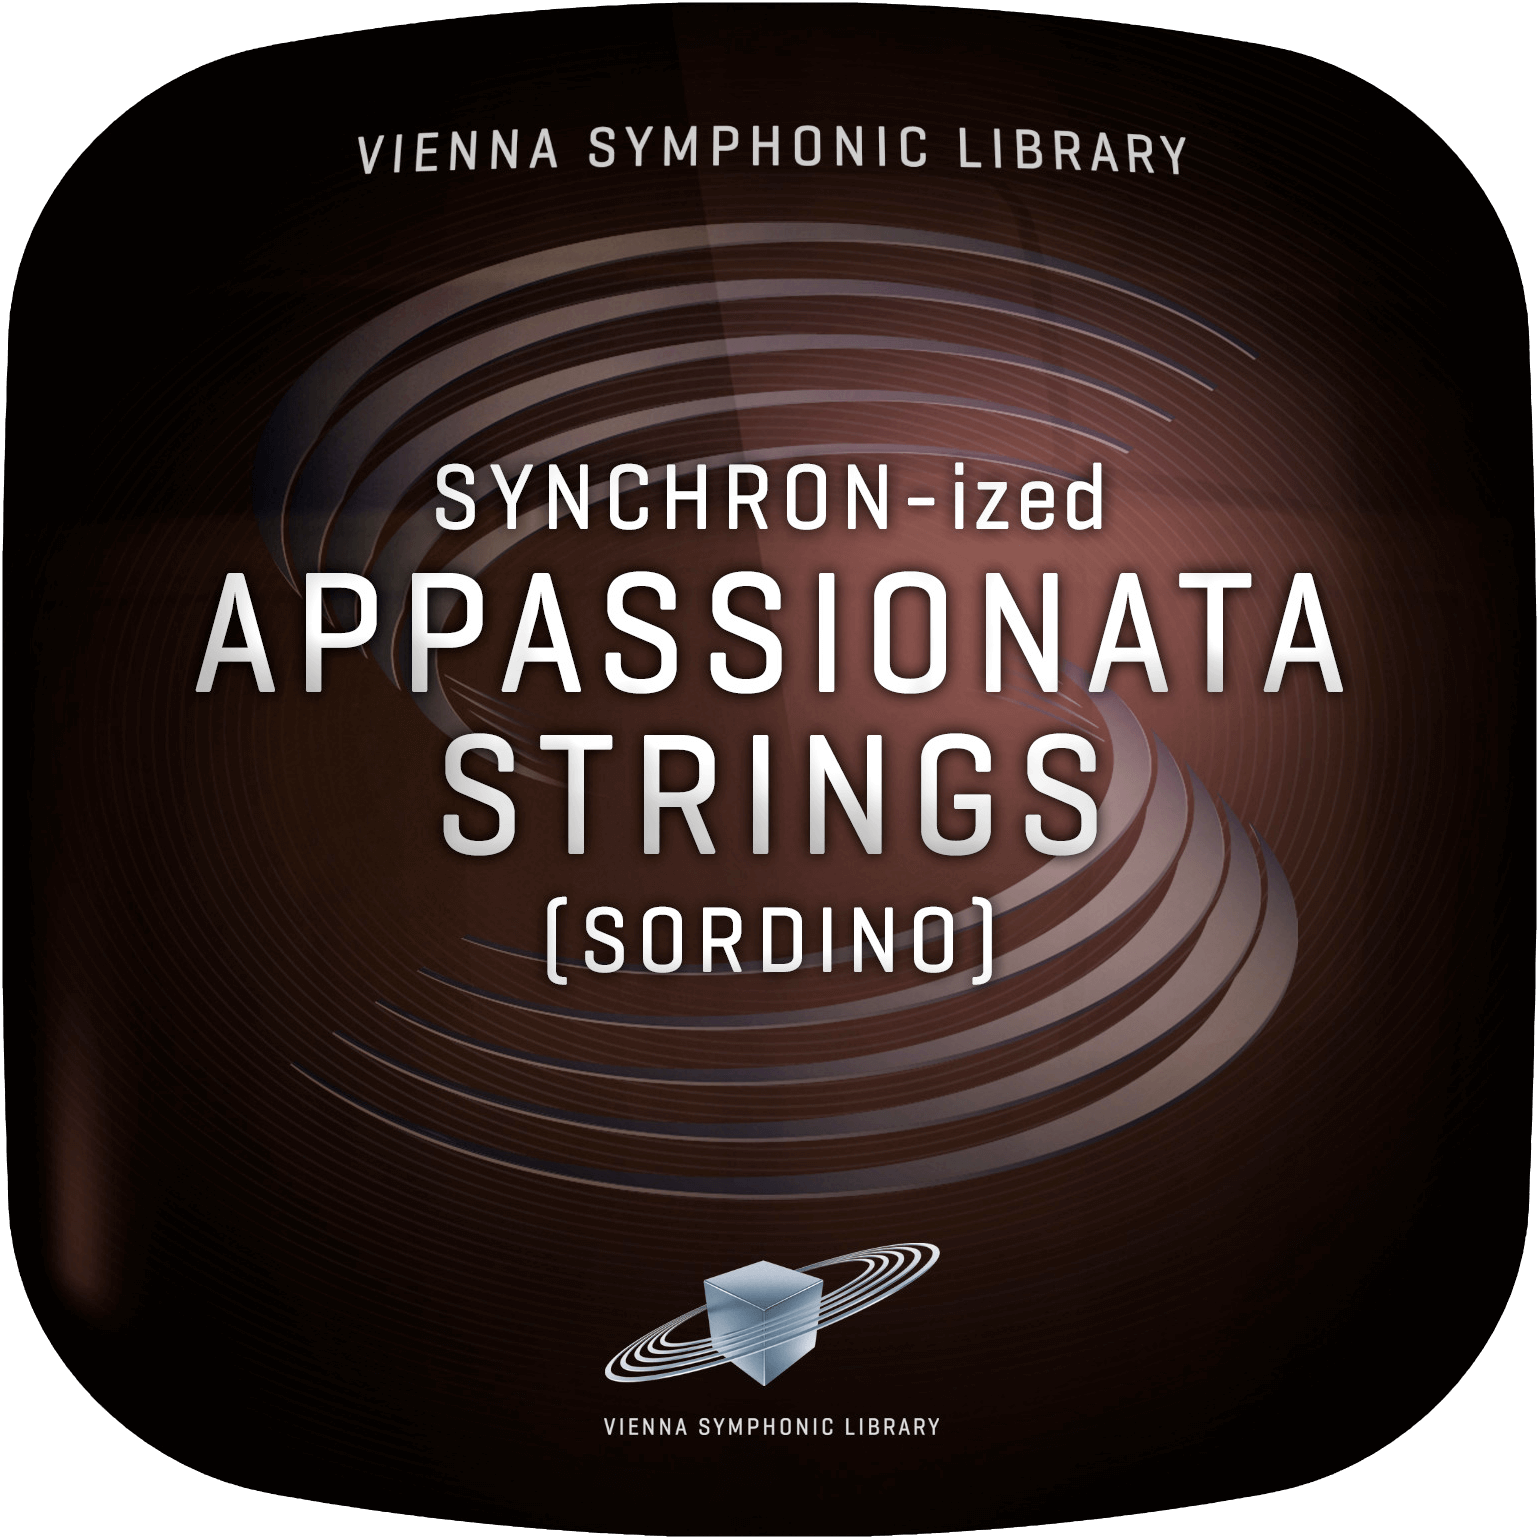 VSL Synchron-ized Appassionata Strings Sordino